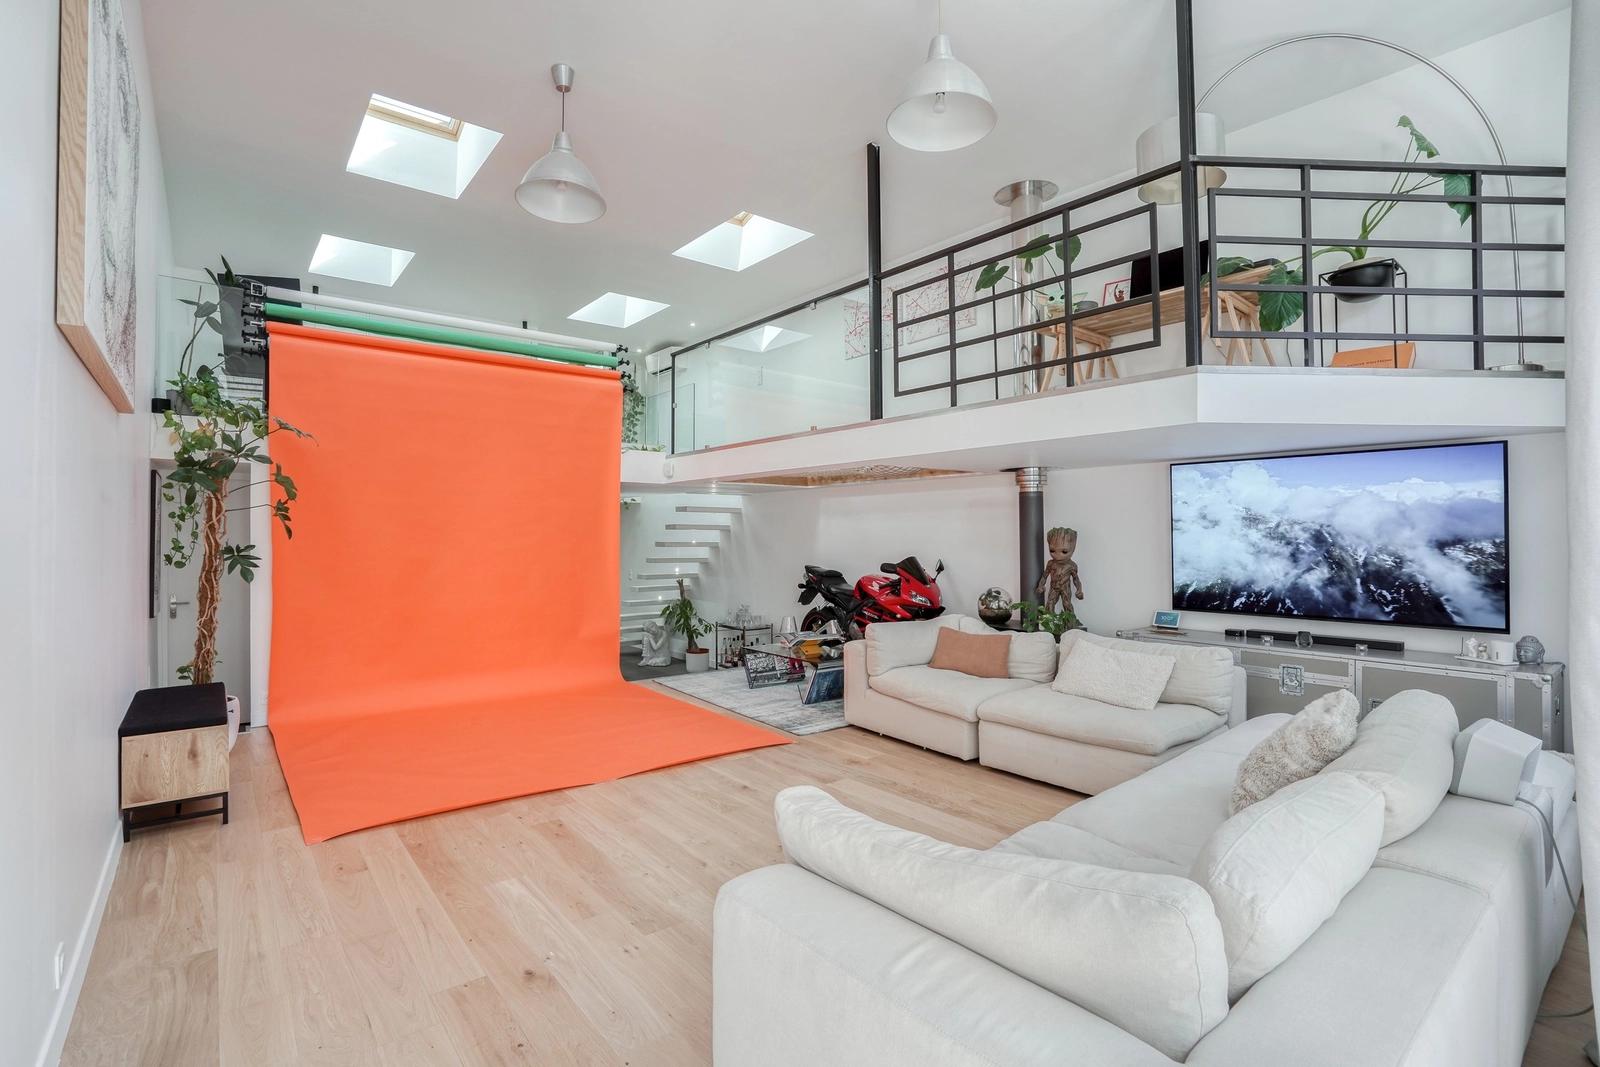 Living room in South-facing loft/ terrace/ photo studio/ film location - 0